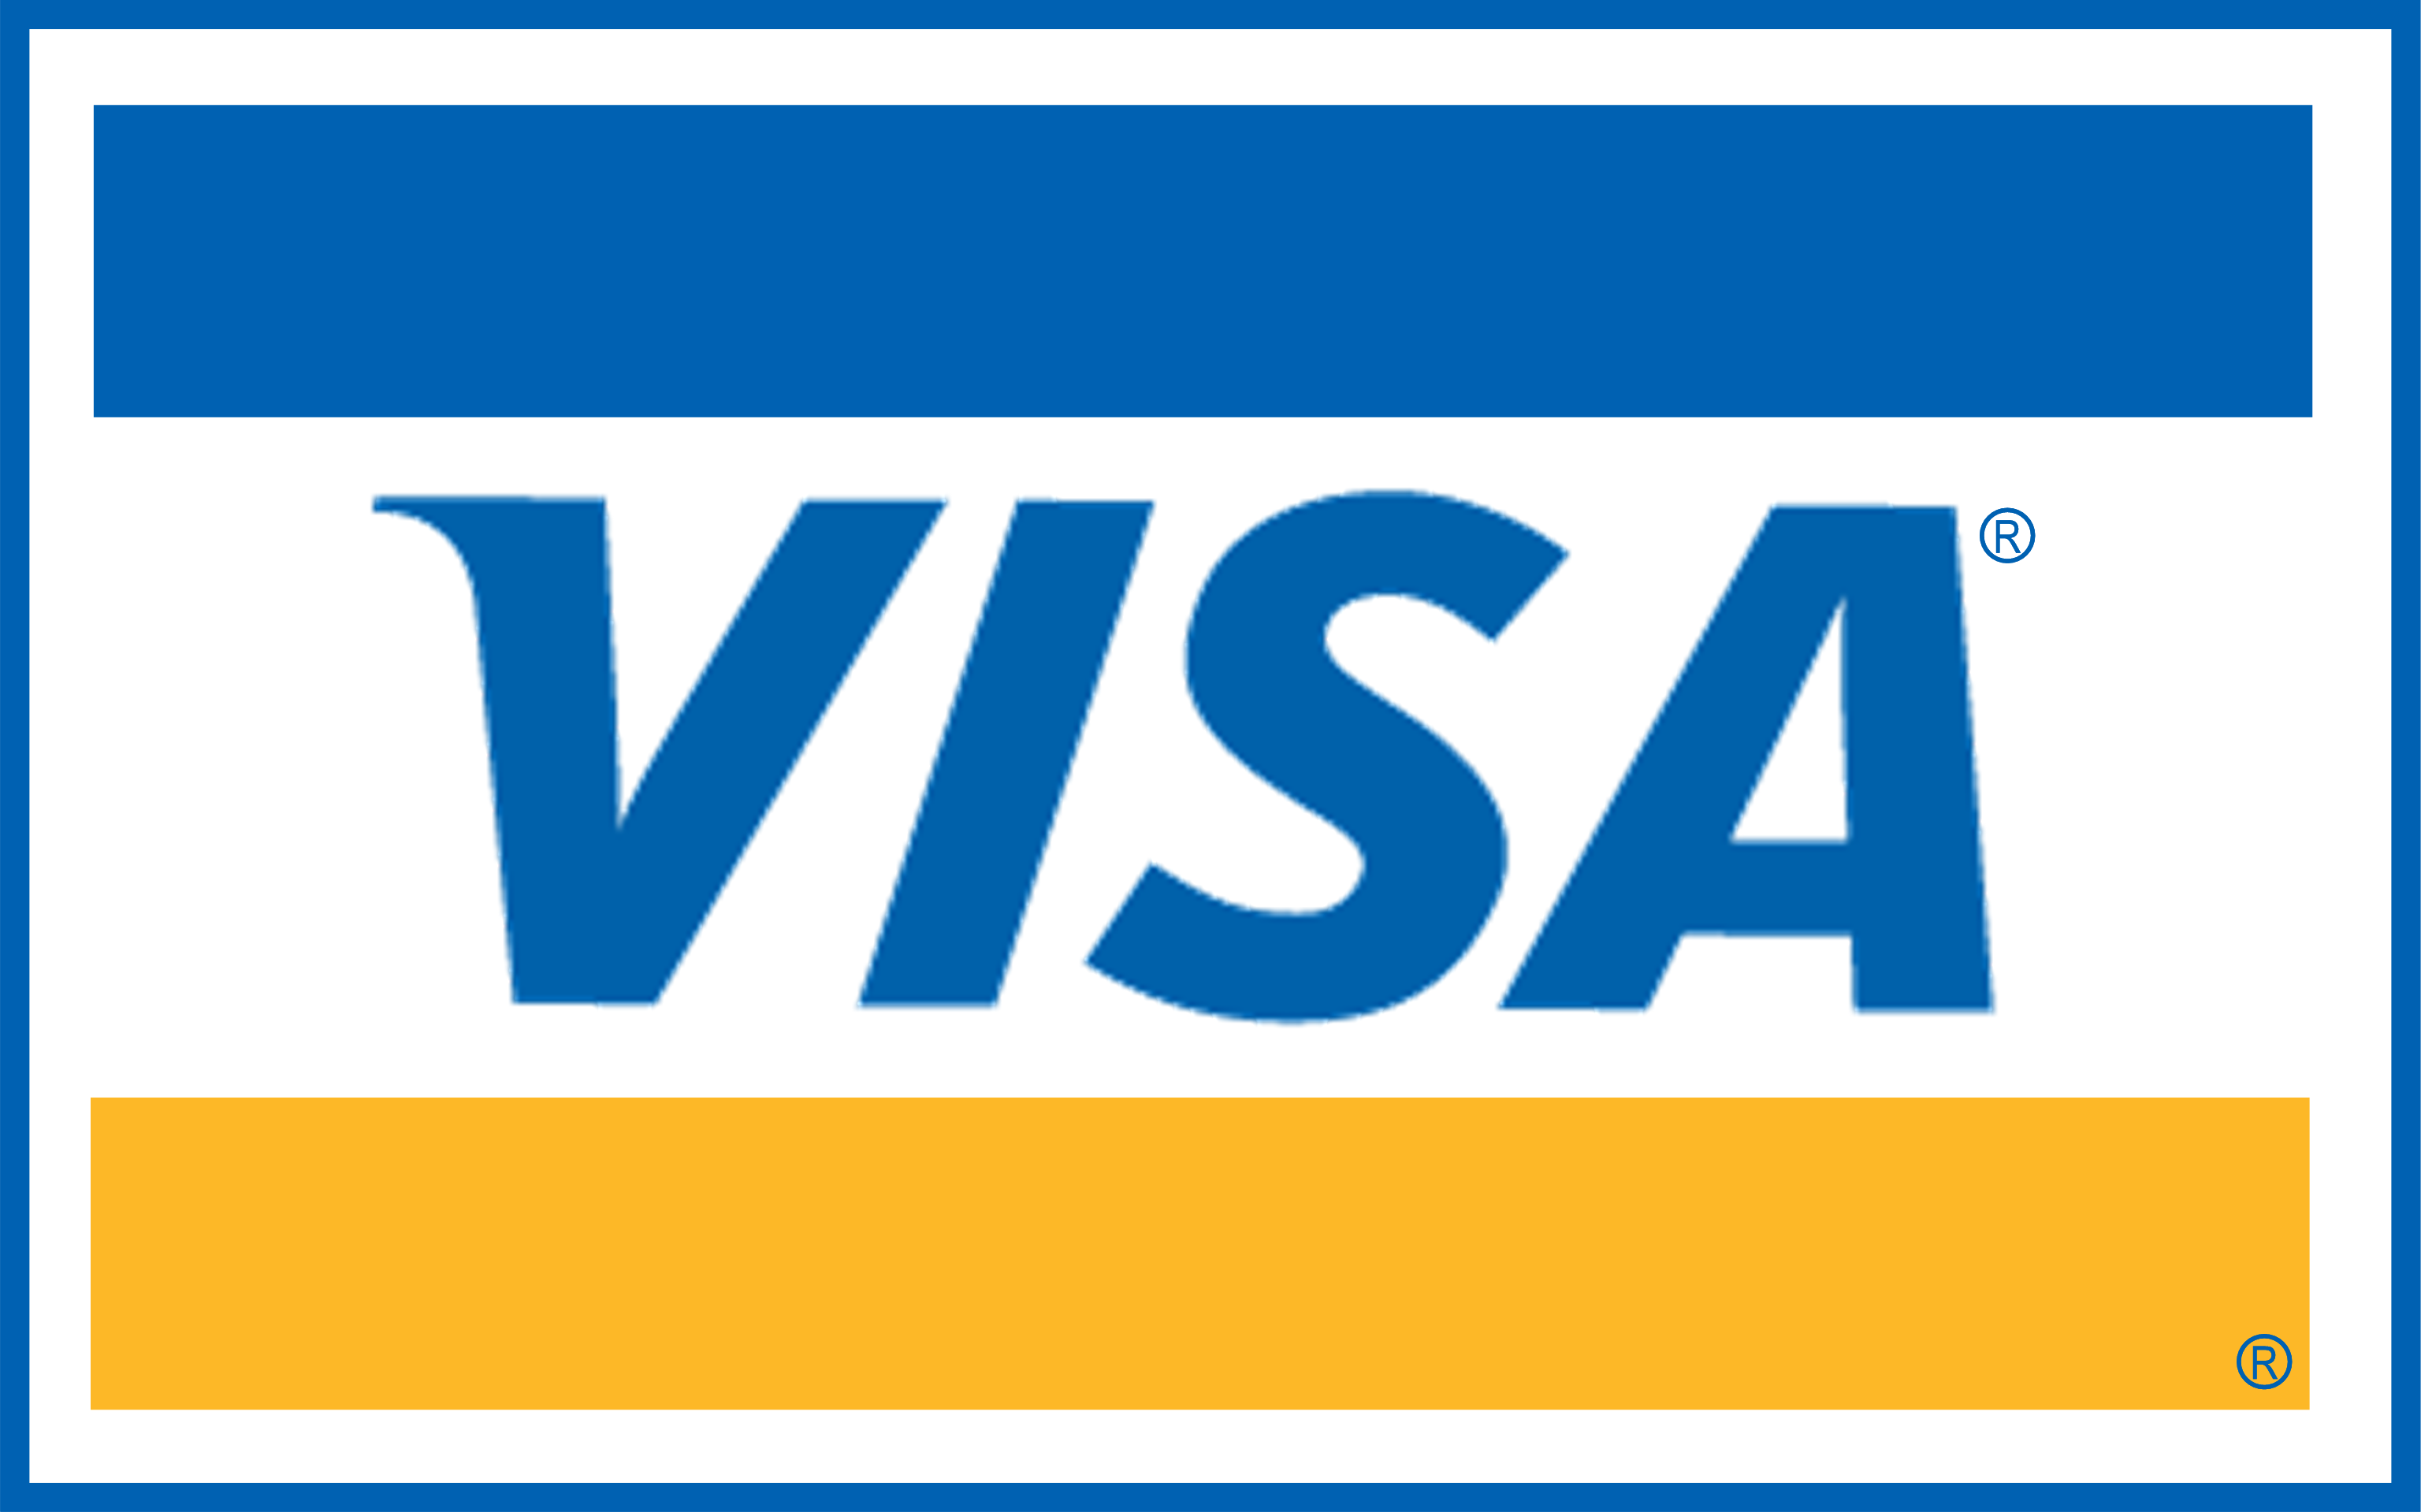 Visa card logo PNG images free download.